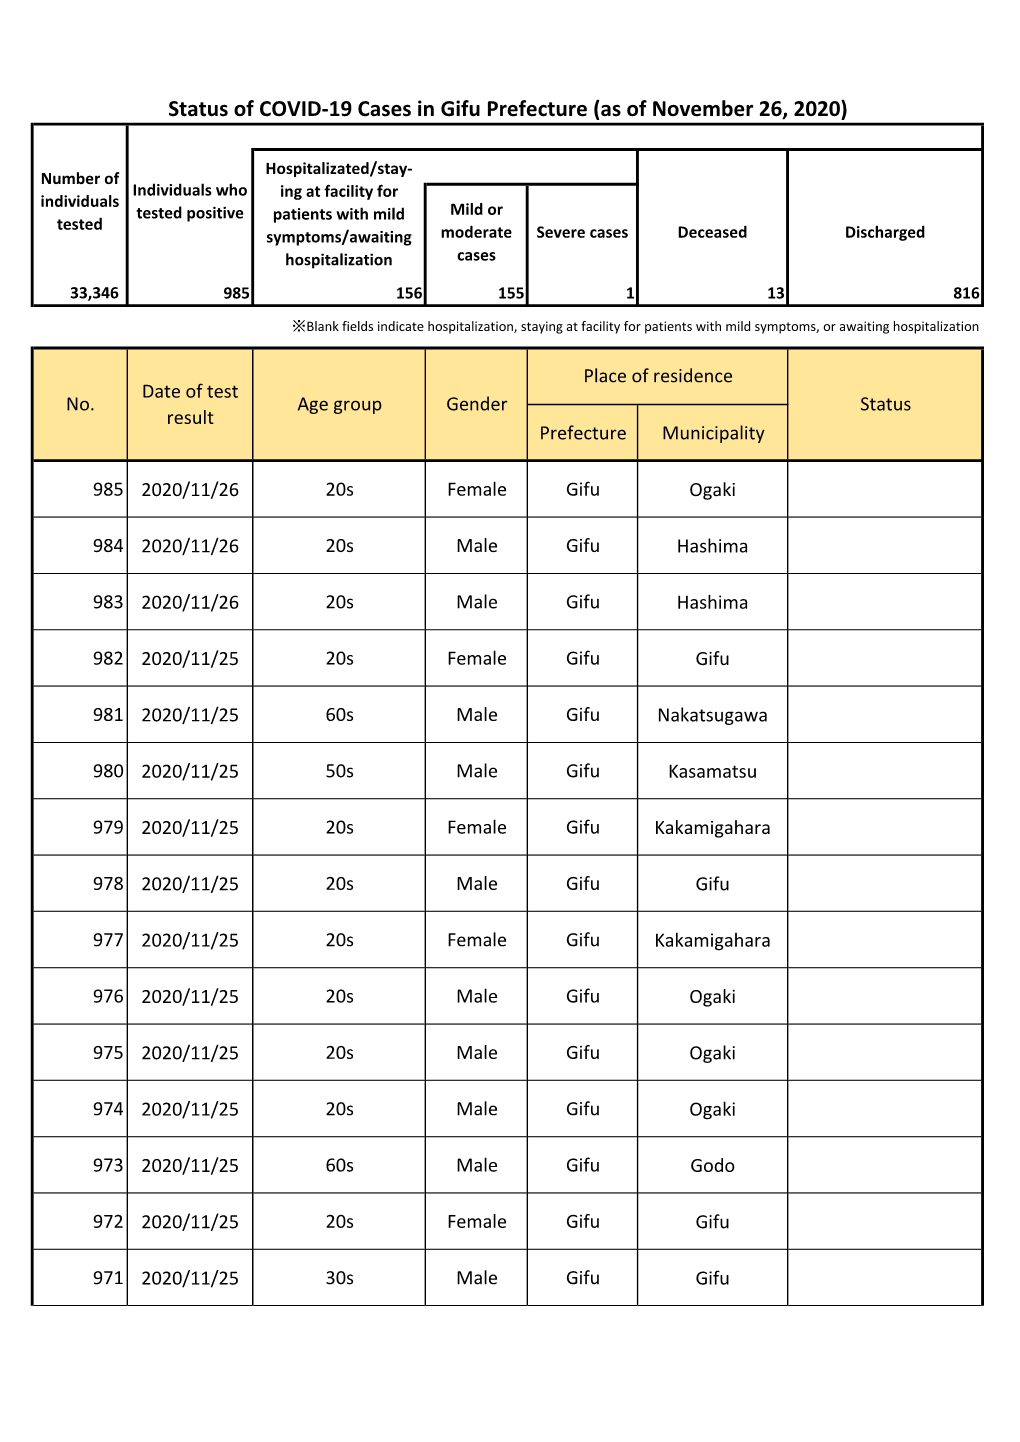 Status of COVID-19 Cases in Gifu Prefecture (As of November 26, 2020)